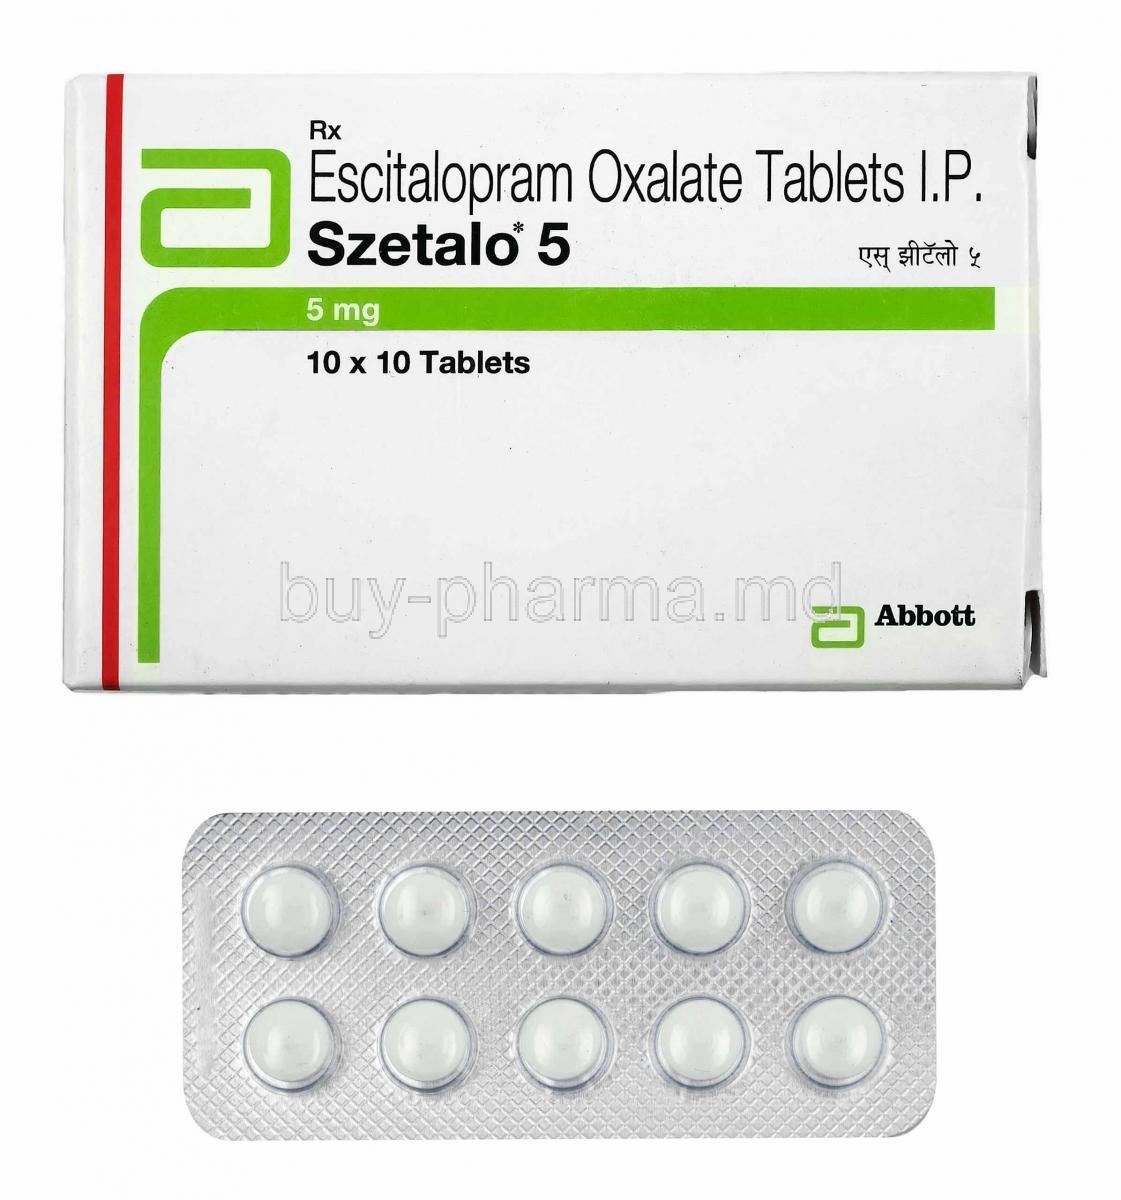 Szetalo, Escitalopram 5mg box and tablets